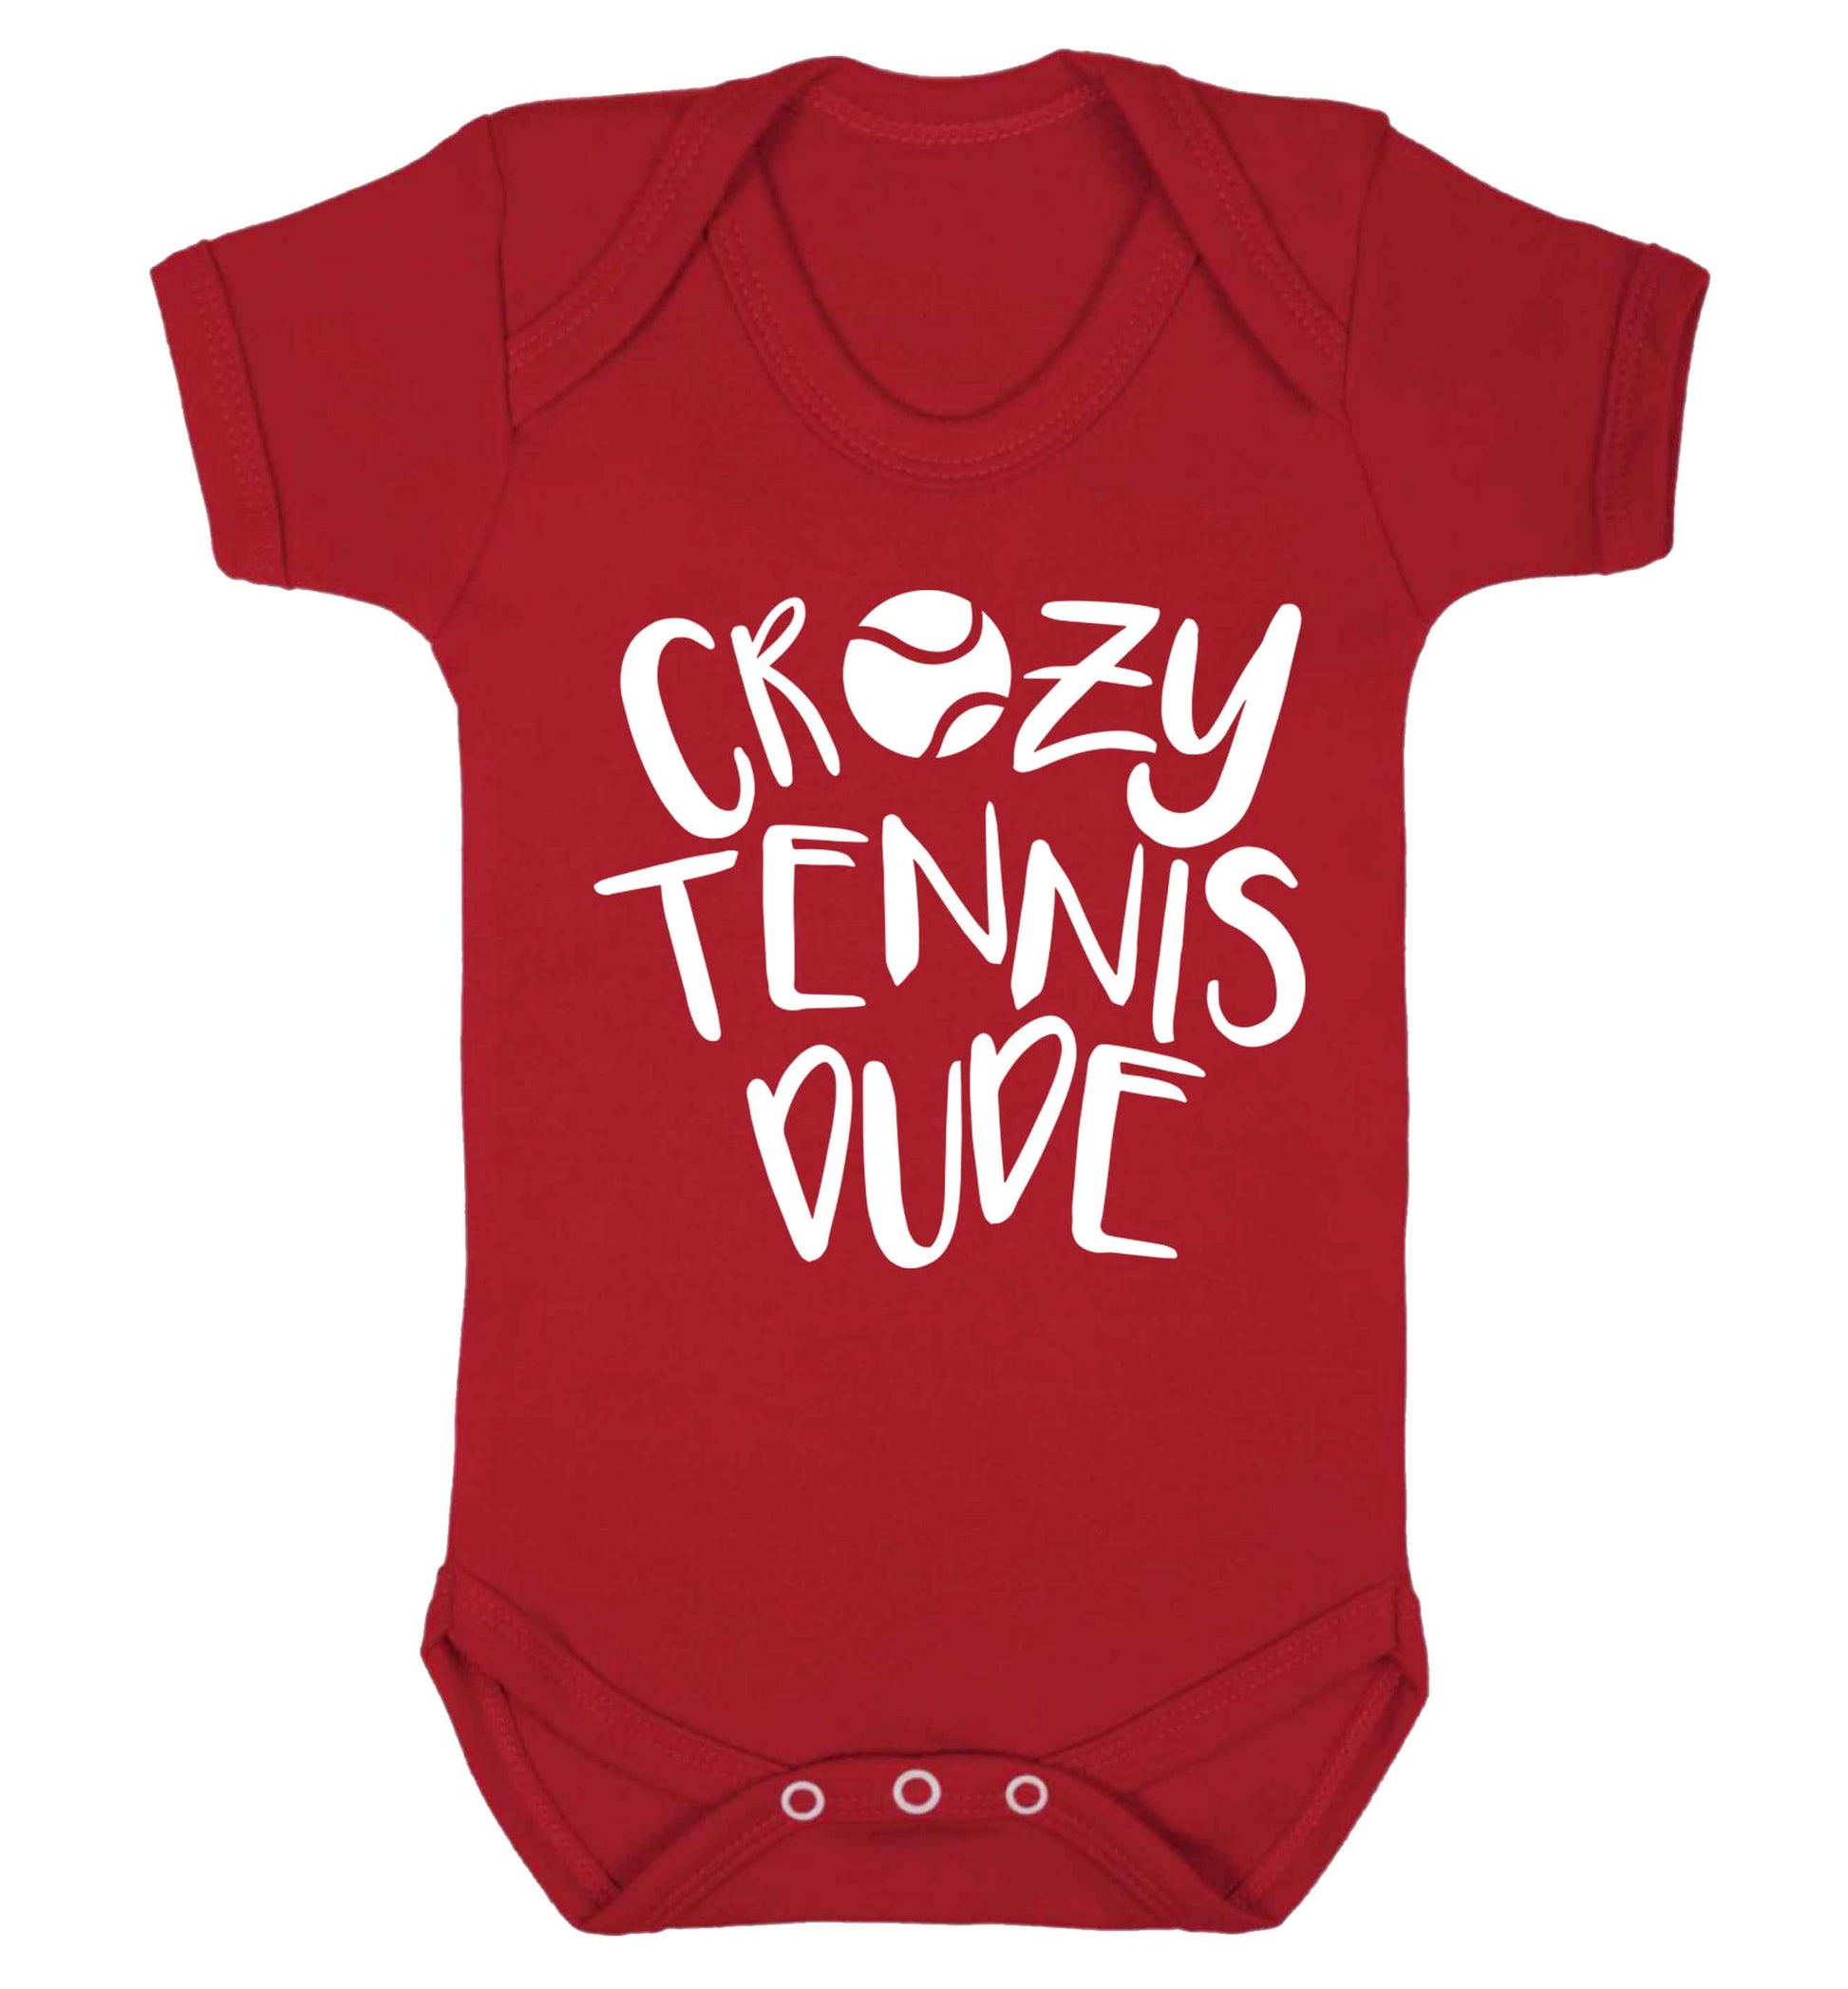 Crazy tennis dude Baby Vest red 18-24 months